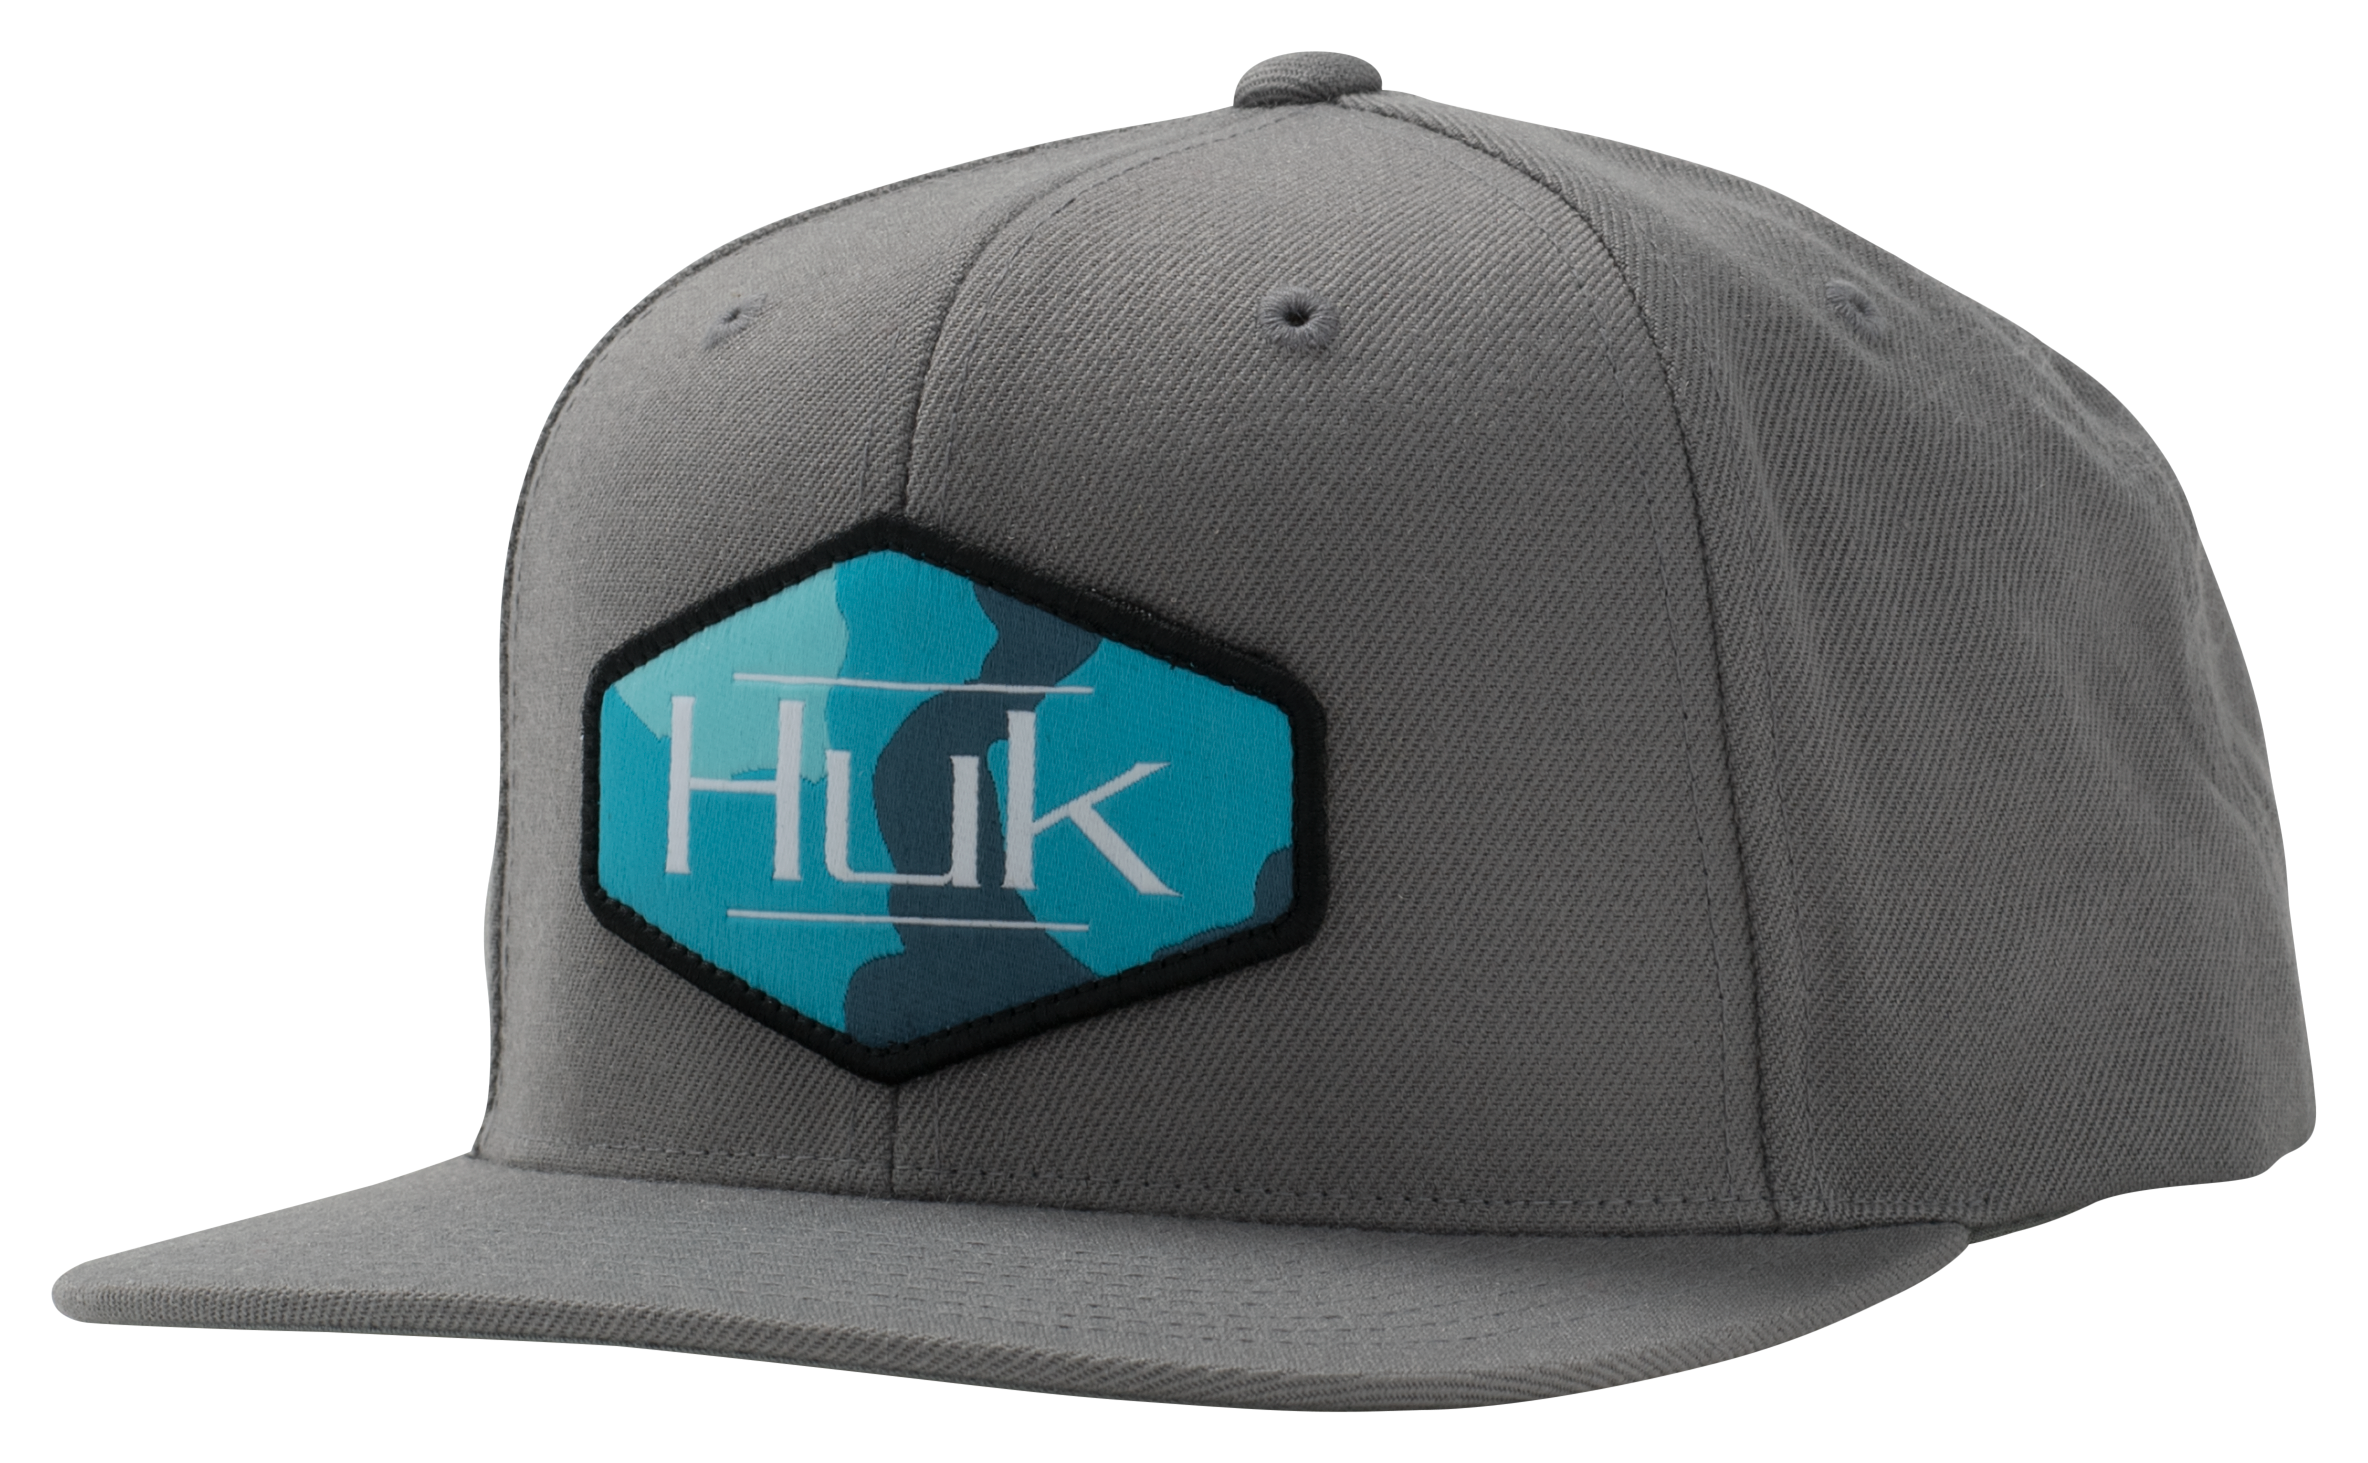 Huk Flatbill Cap for Kids